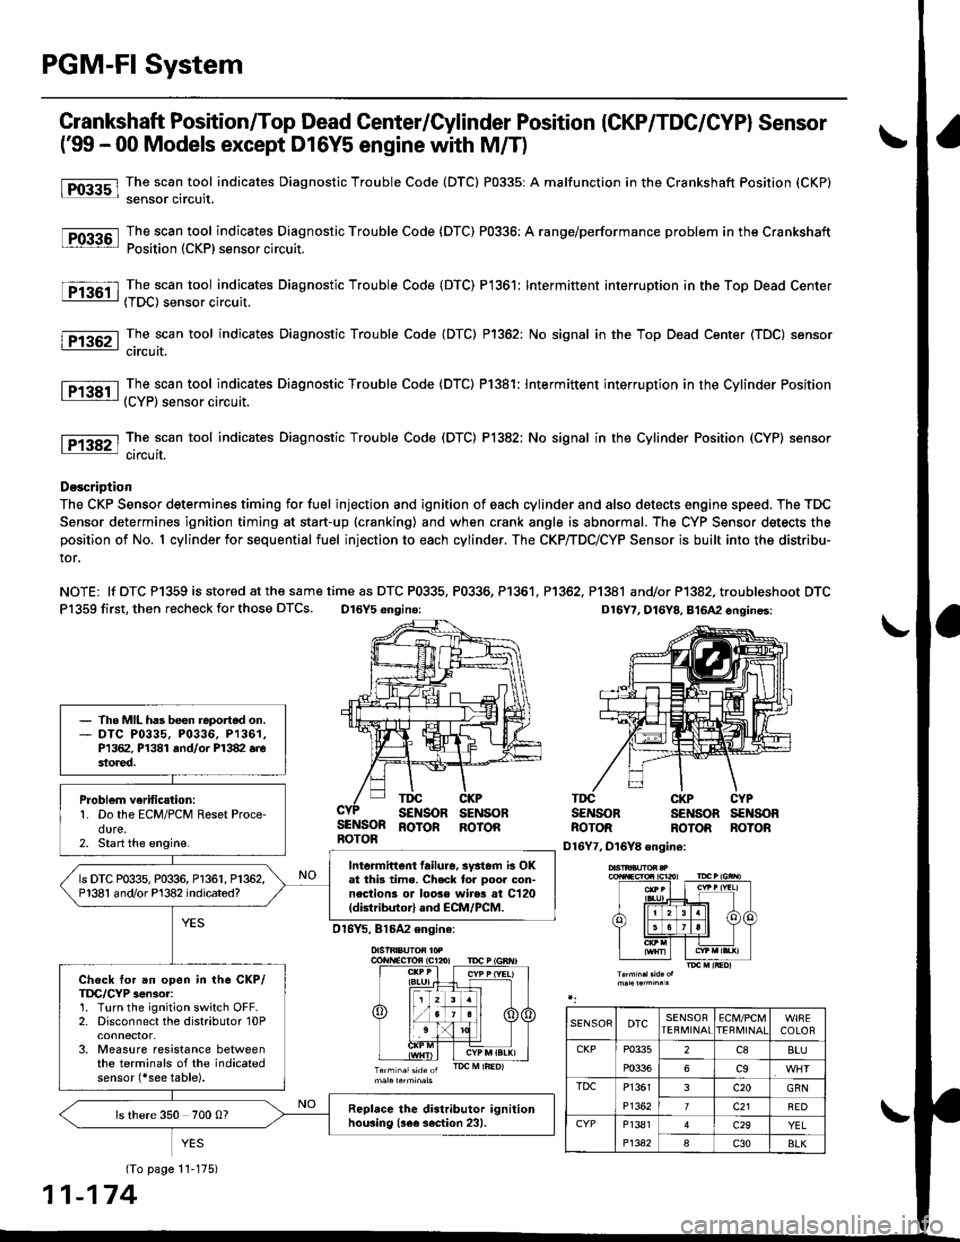 HONDA CIVIC 2000 6.G Workshop Manual PGM-FI System
l-Fos3sl
tFos36l
tF1361 l
Fr362-1
tF13sil
Crankshaft Position/Top Dead Center/Cylinder Position (CKP/TDC/CYPI Sensor
f99 - 00 Models except D16Y5 engine with M/T)
The scan tool indicates